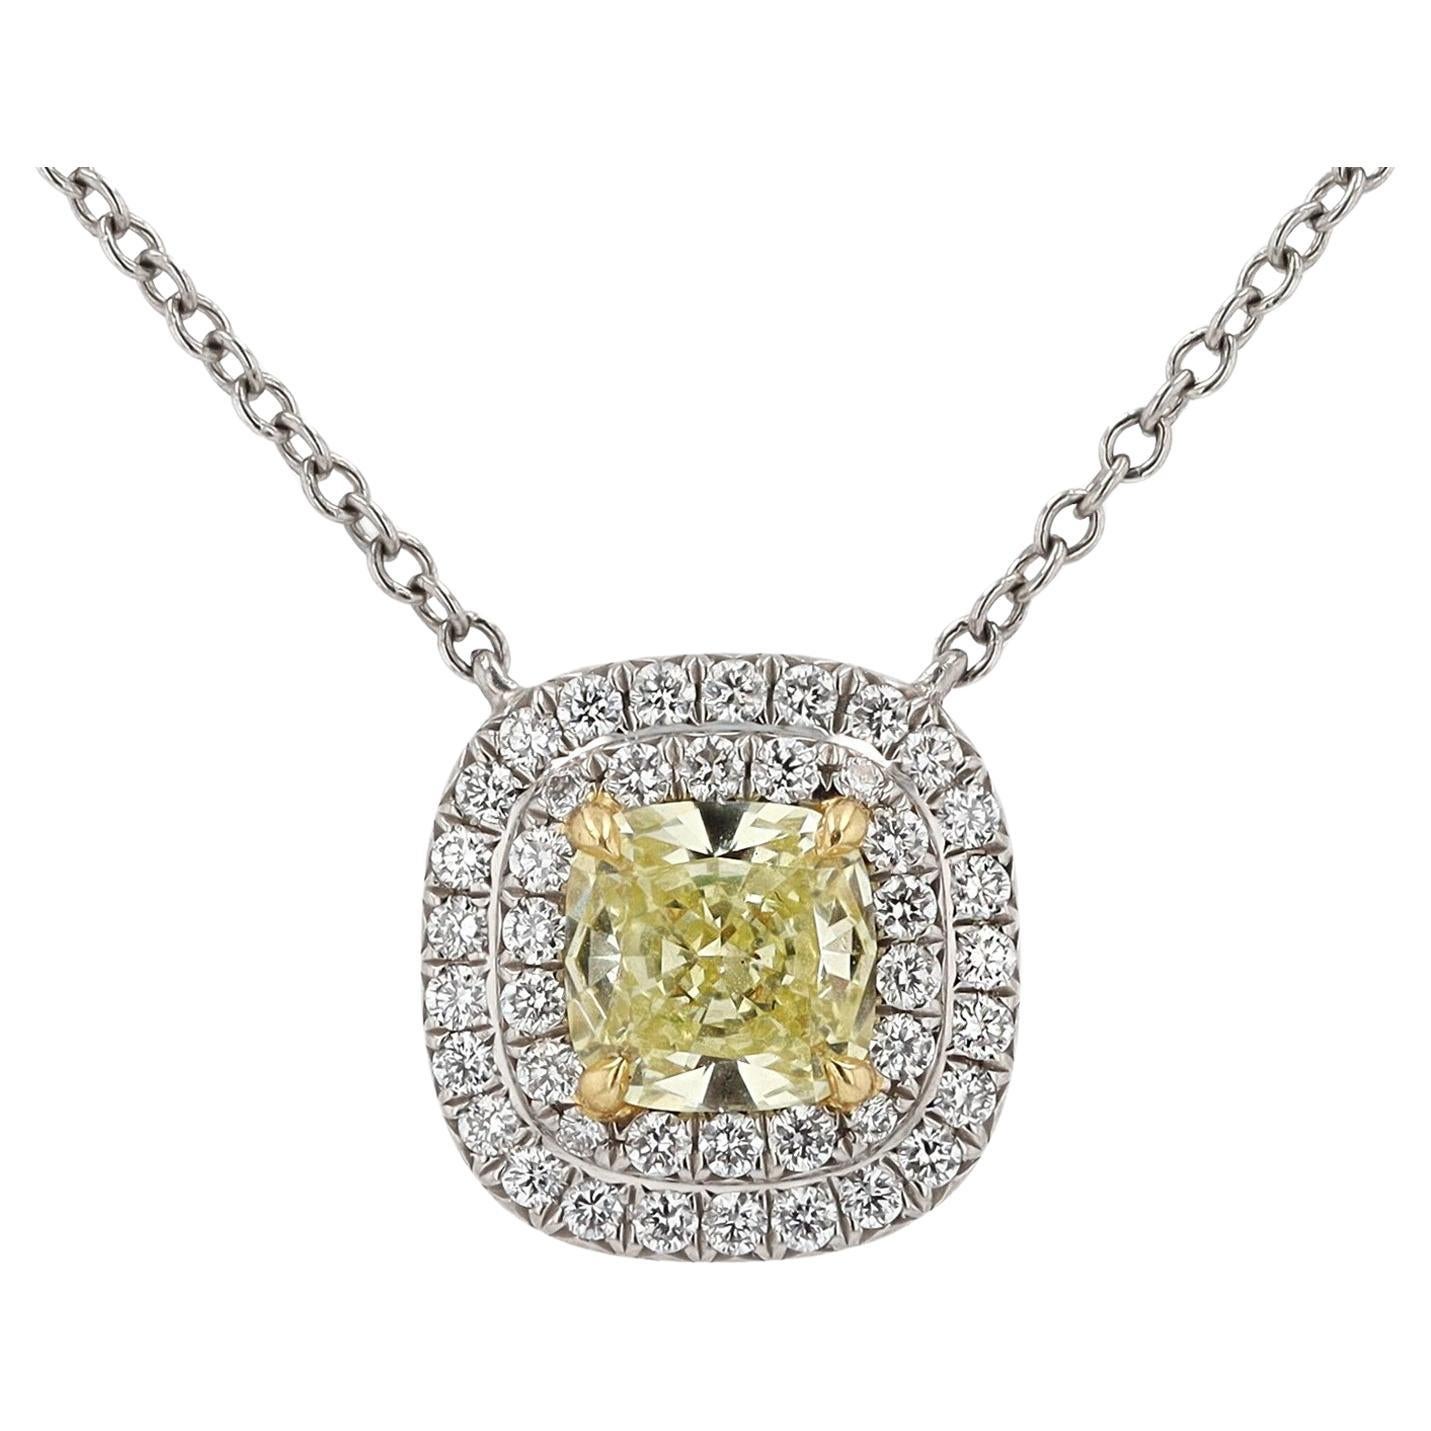 Signées Tiffany & Co. Soleste, collier pendentif fantaisie en diamant jaune intense